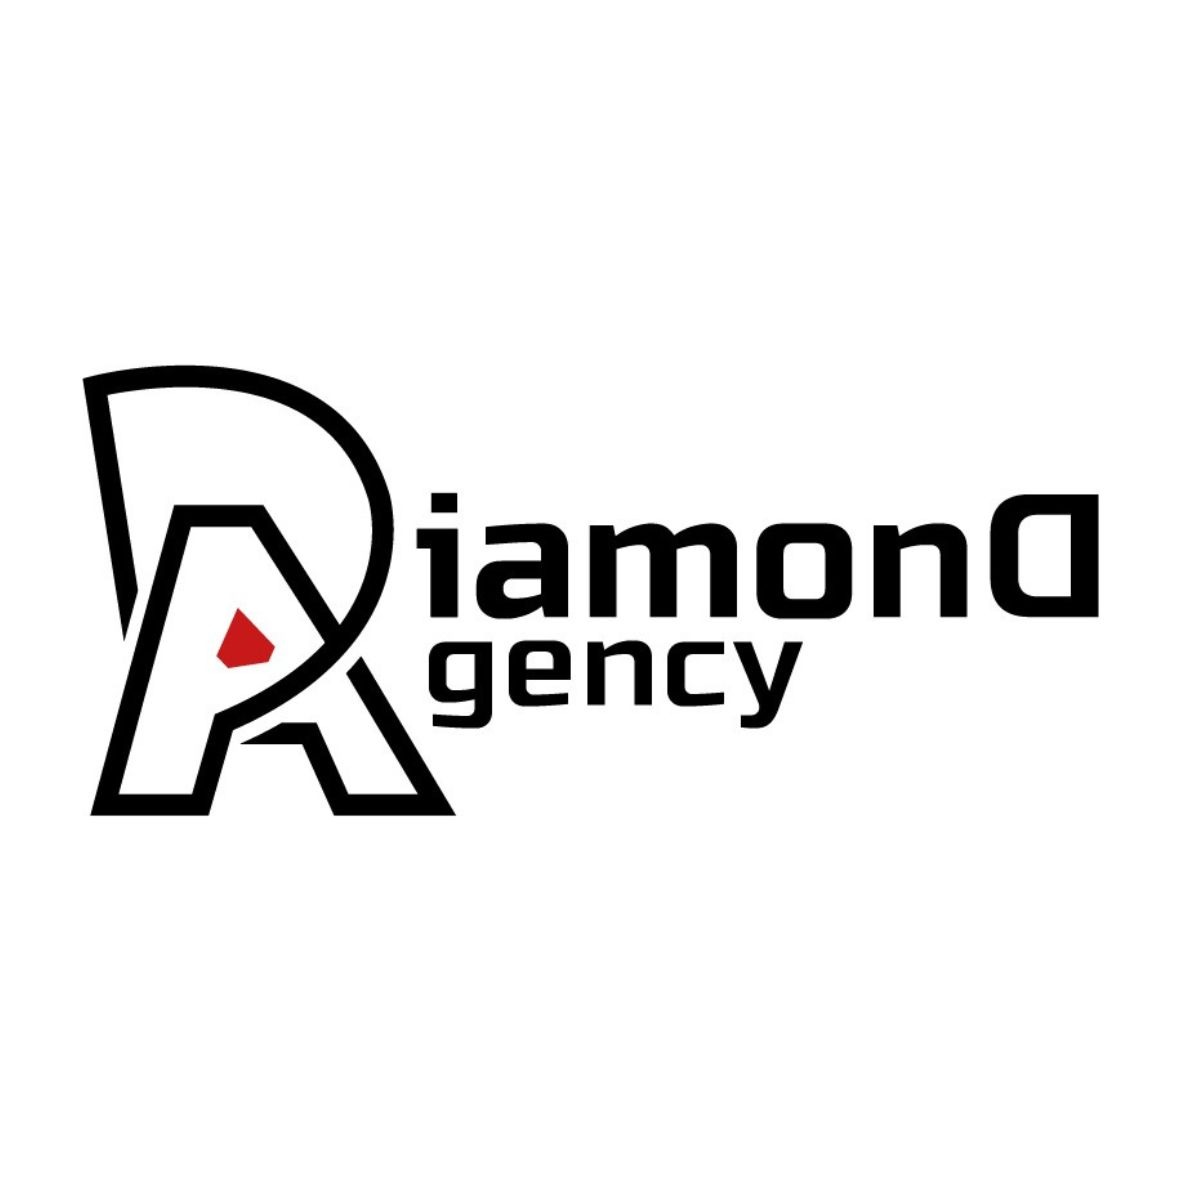 Création de logo diamond agency